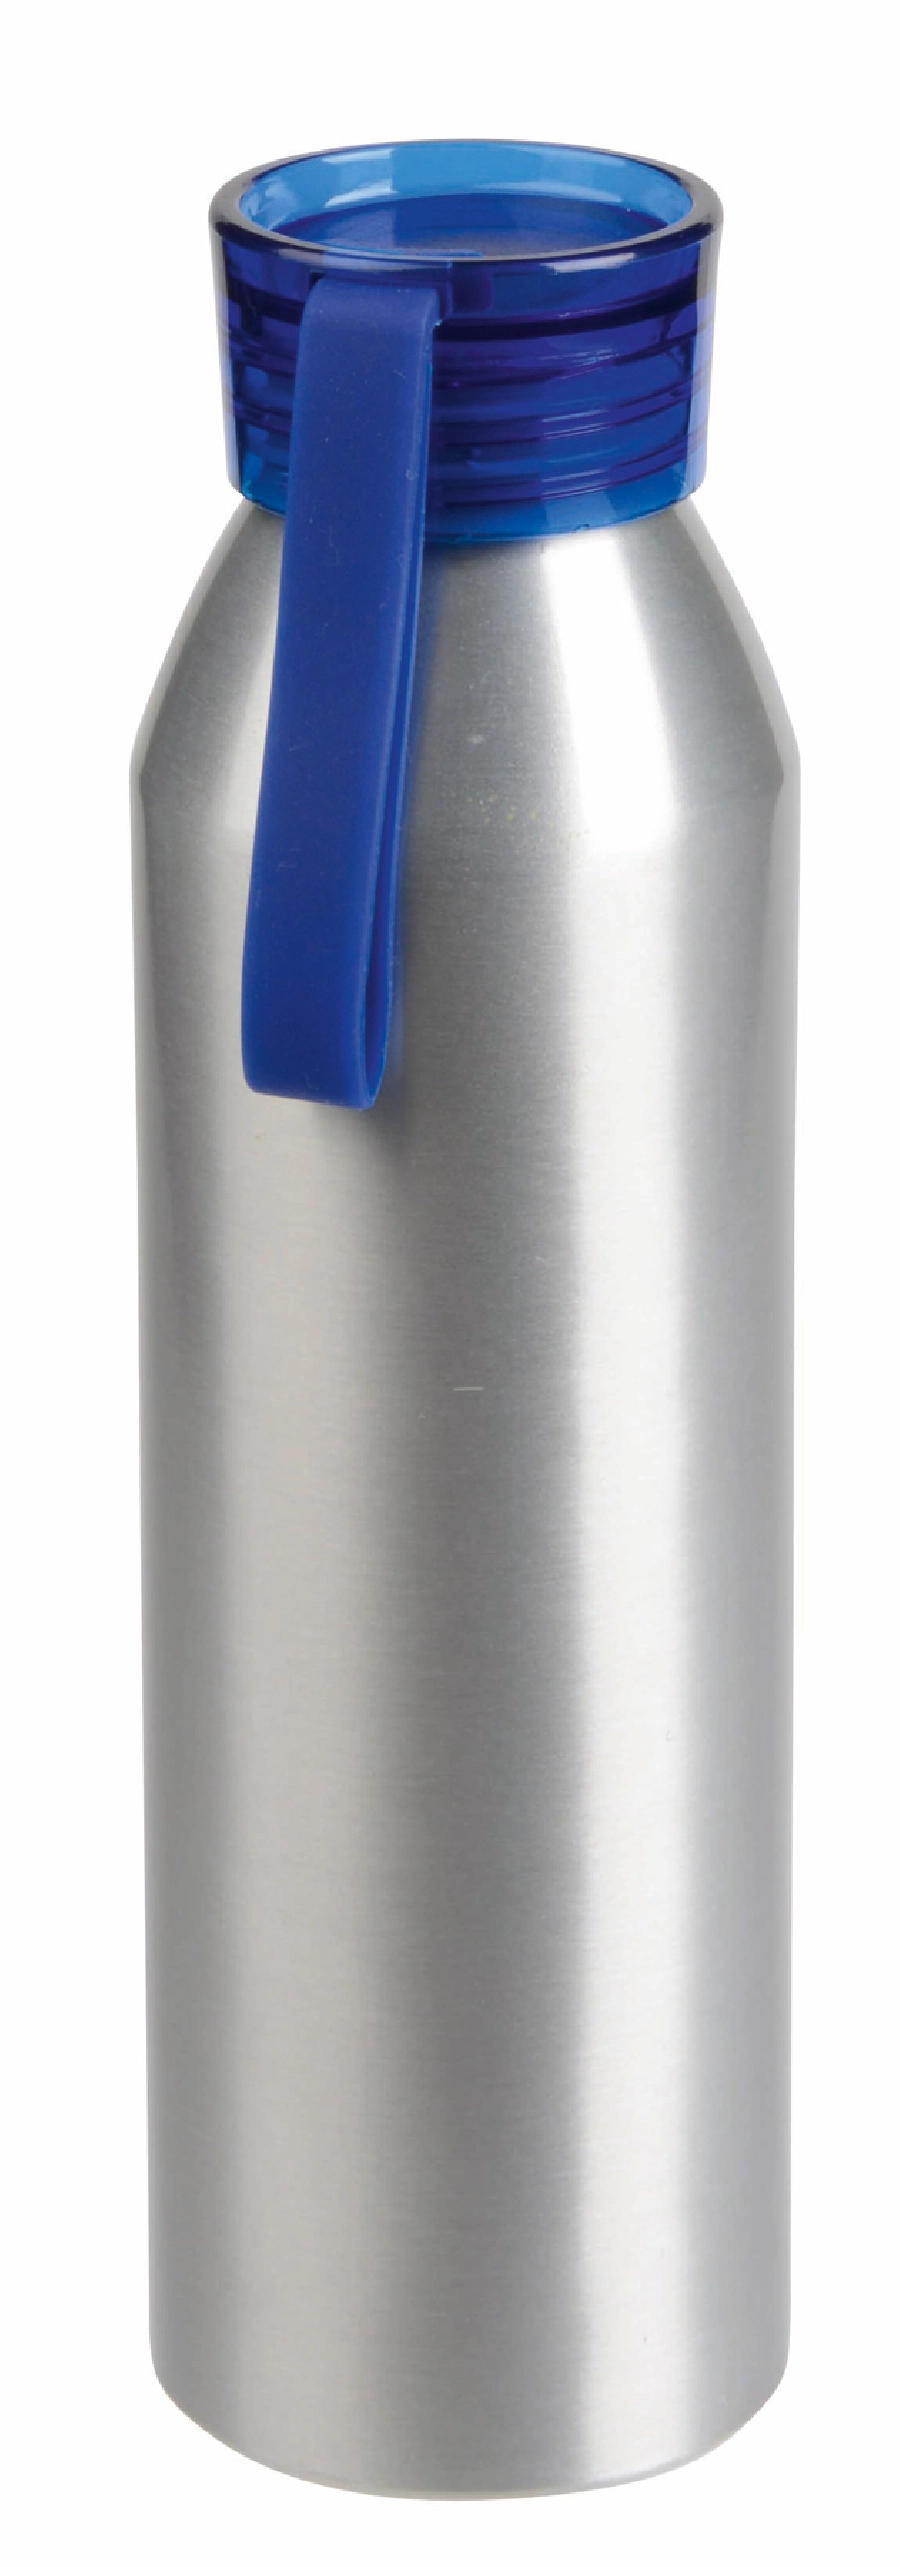 Aluminiowa butelka COLOURED, niebieski 56-0304426